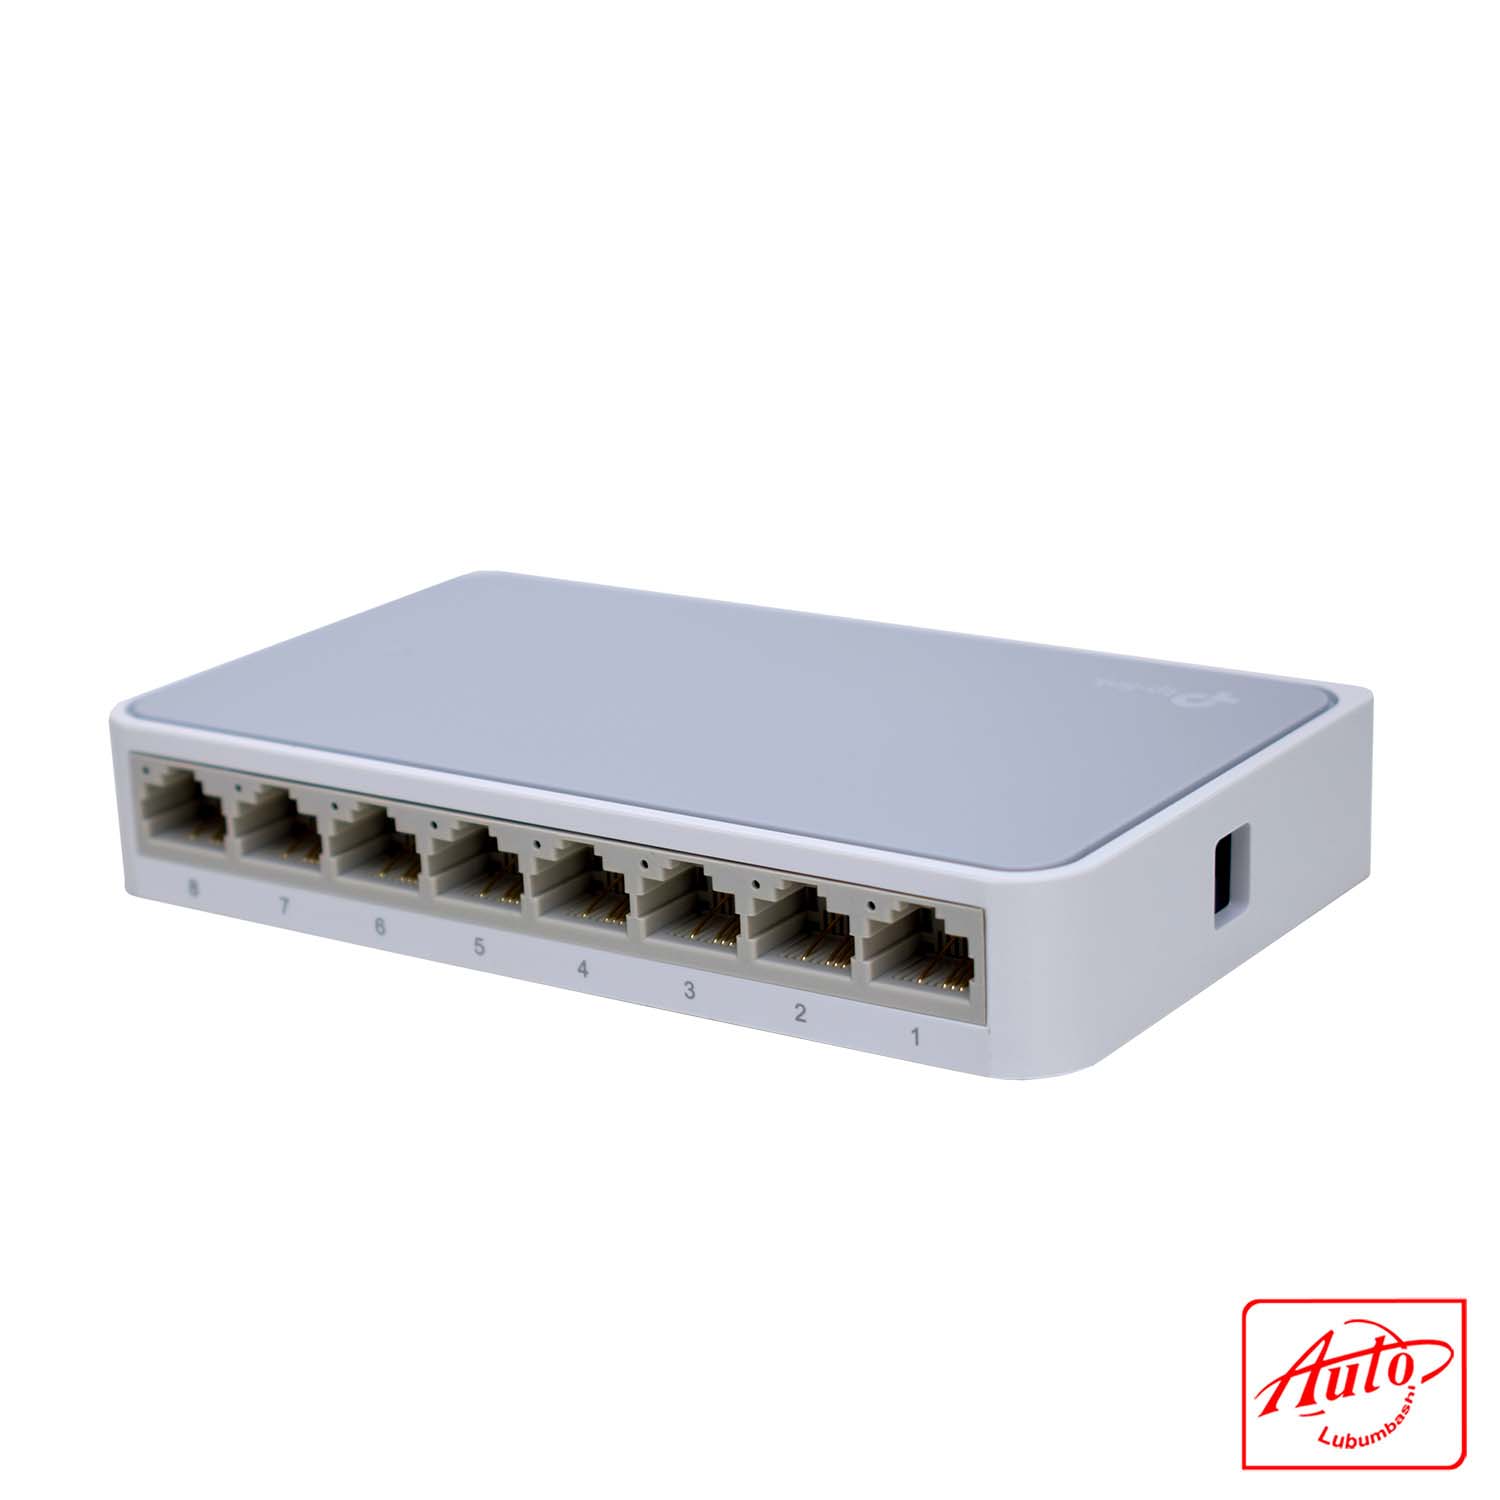 Desktop Switch 8Ports GIGABIT – TP-LINK – Auto Lubumbashi